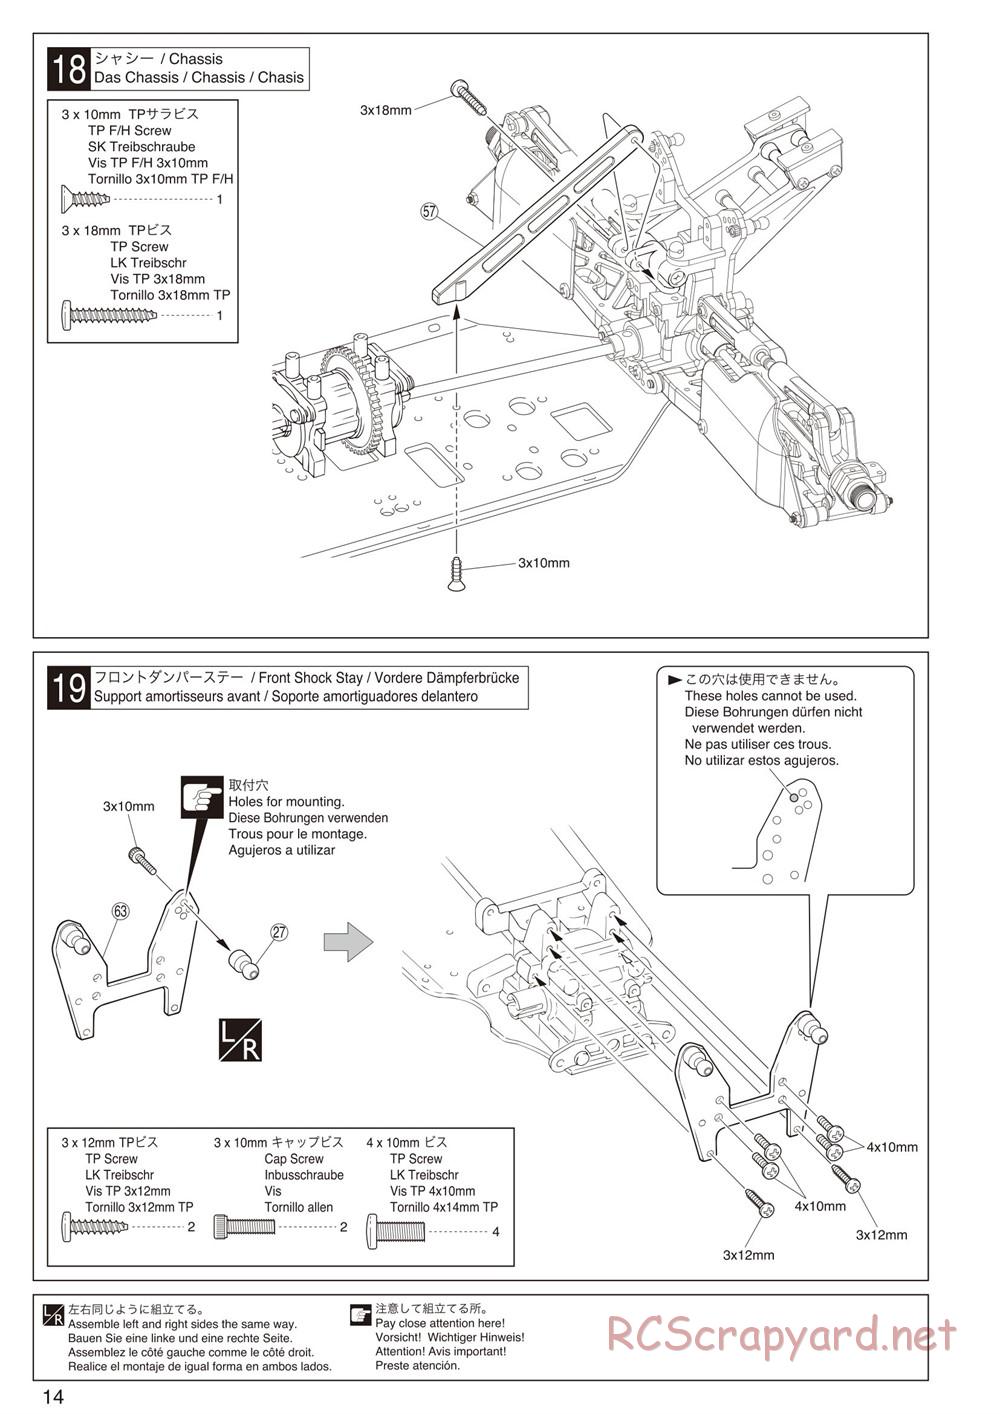 Kyosho - Inferno NEO ST Race Spec - Manual - Page 14